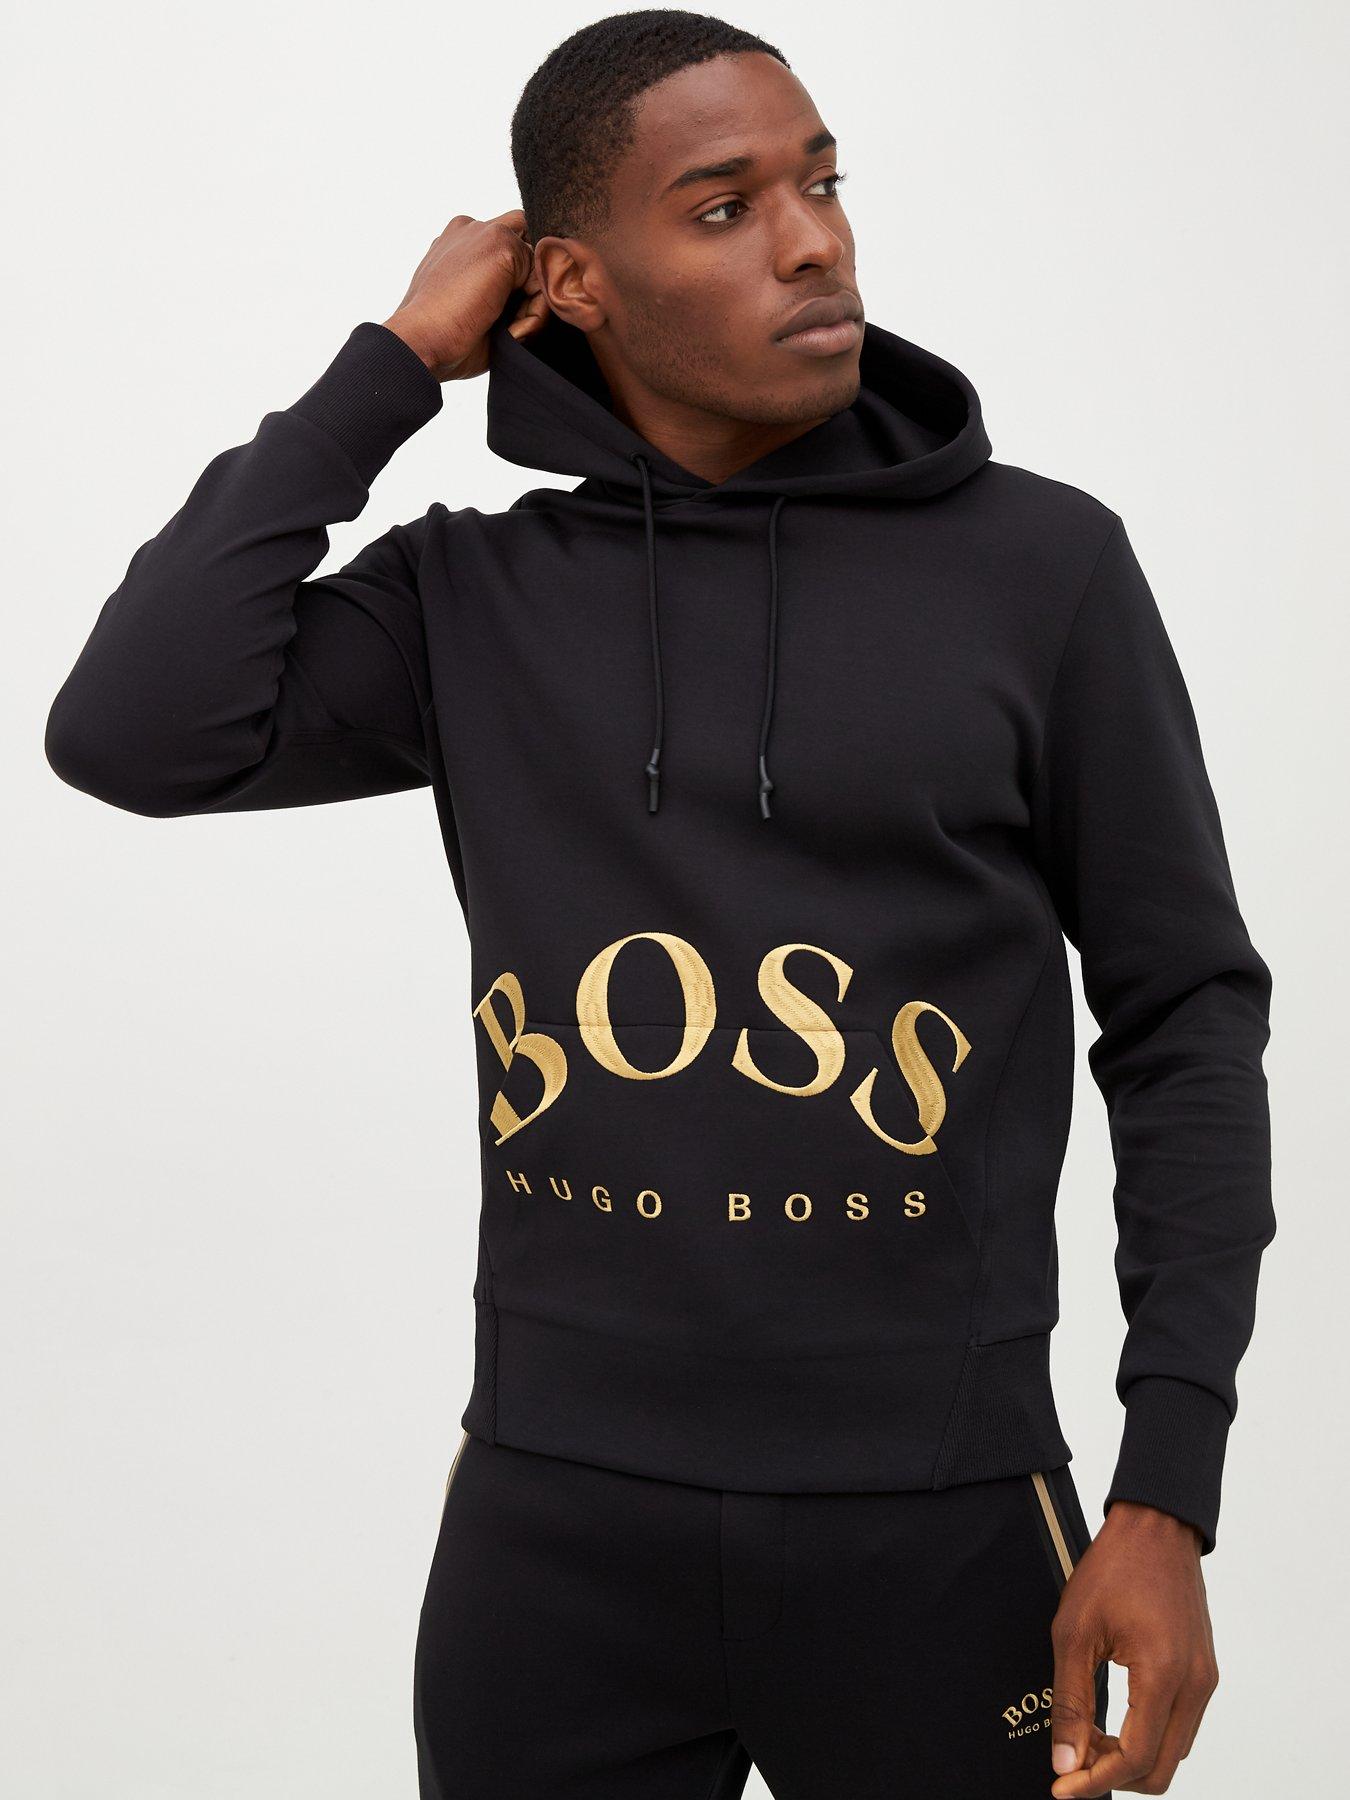 hugo boss hoodie black and gold